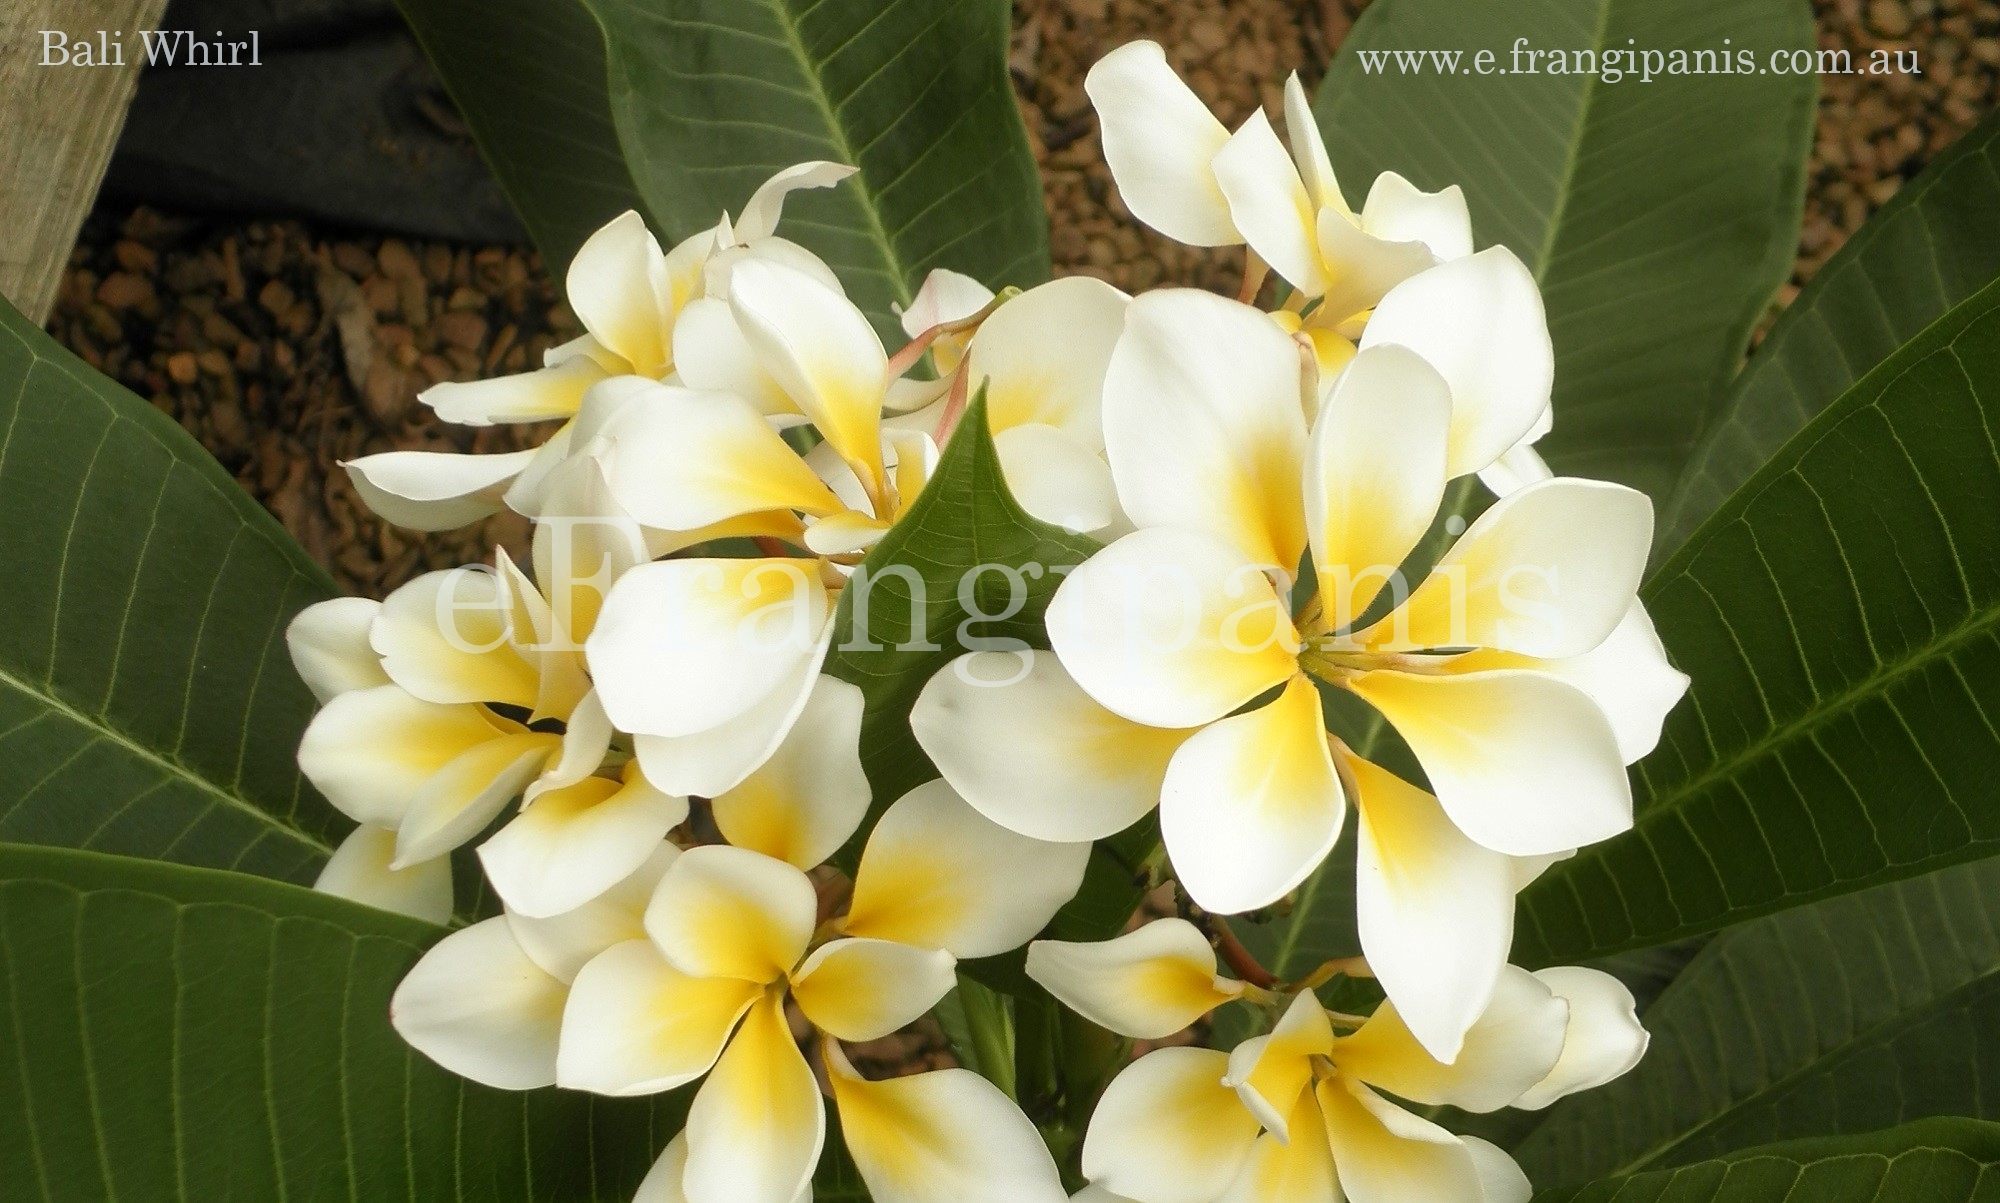 Bali-Whirl-Frangipani-Flowers